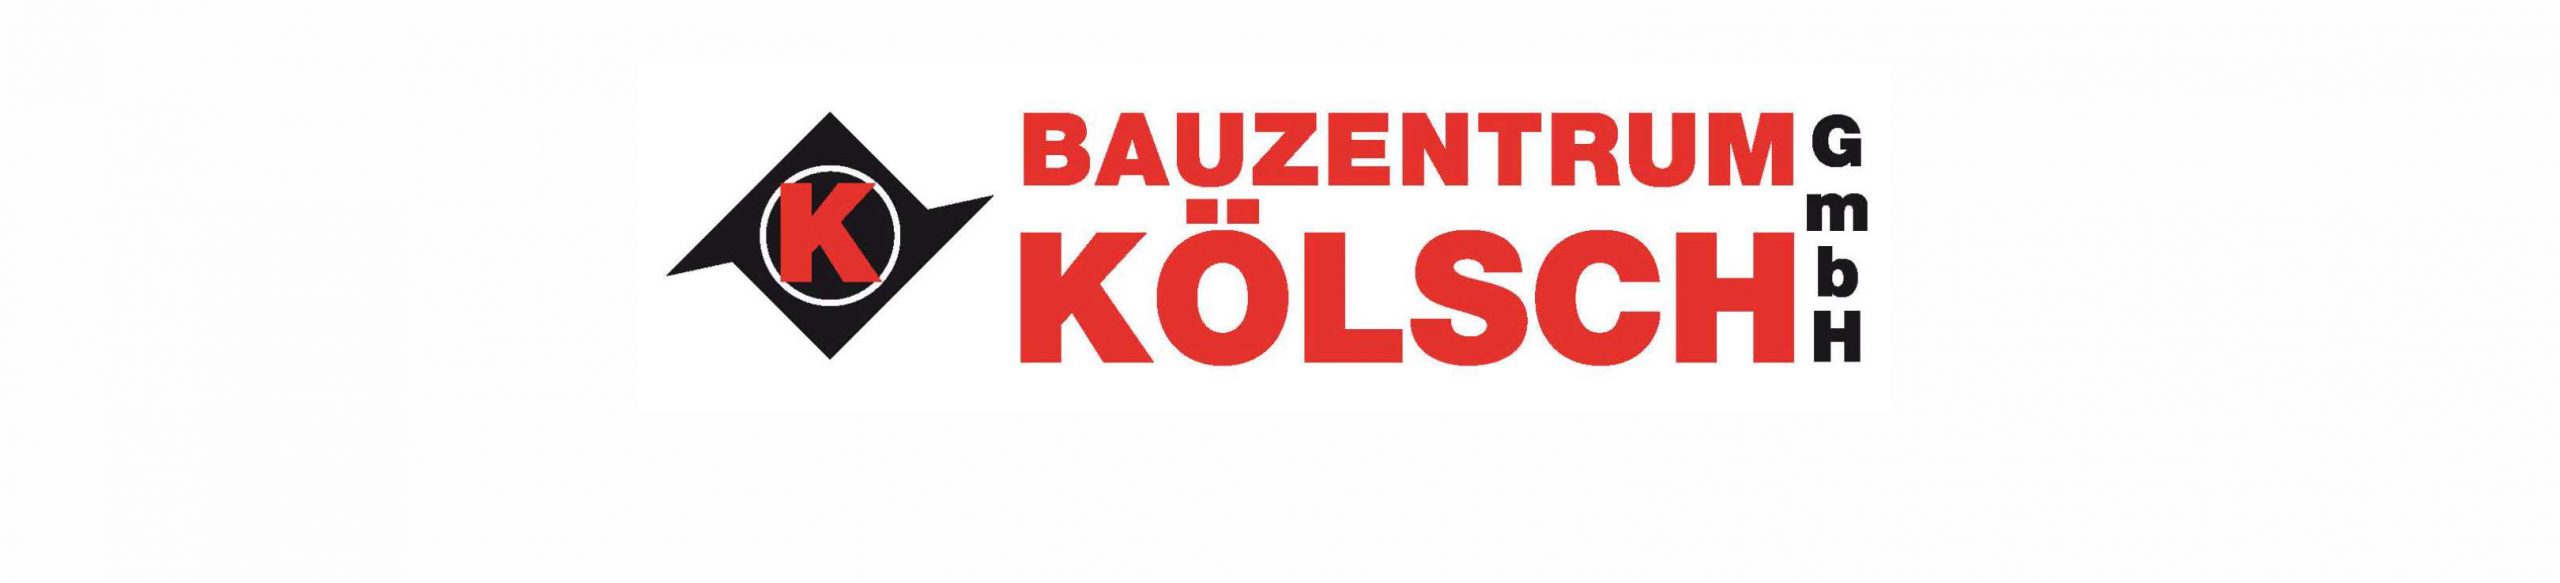 Bauzentrum Kölsch GmbH - Dürrholz-Daufenbach